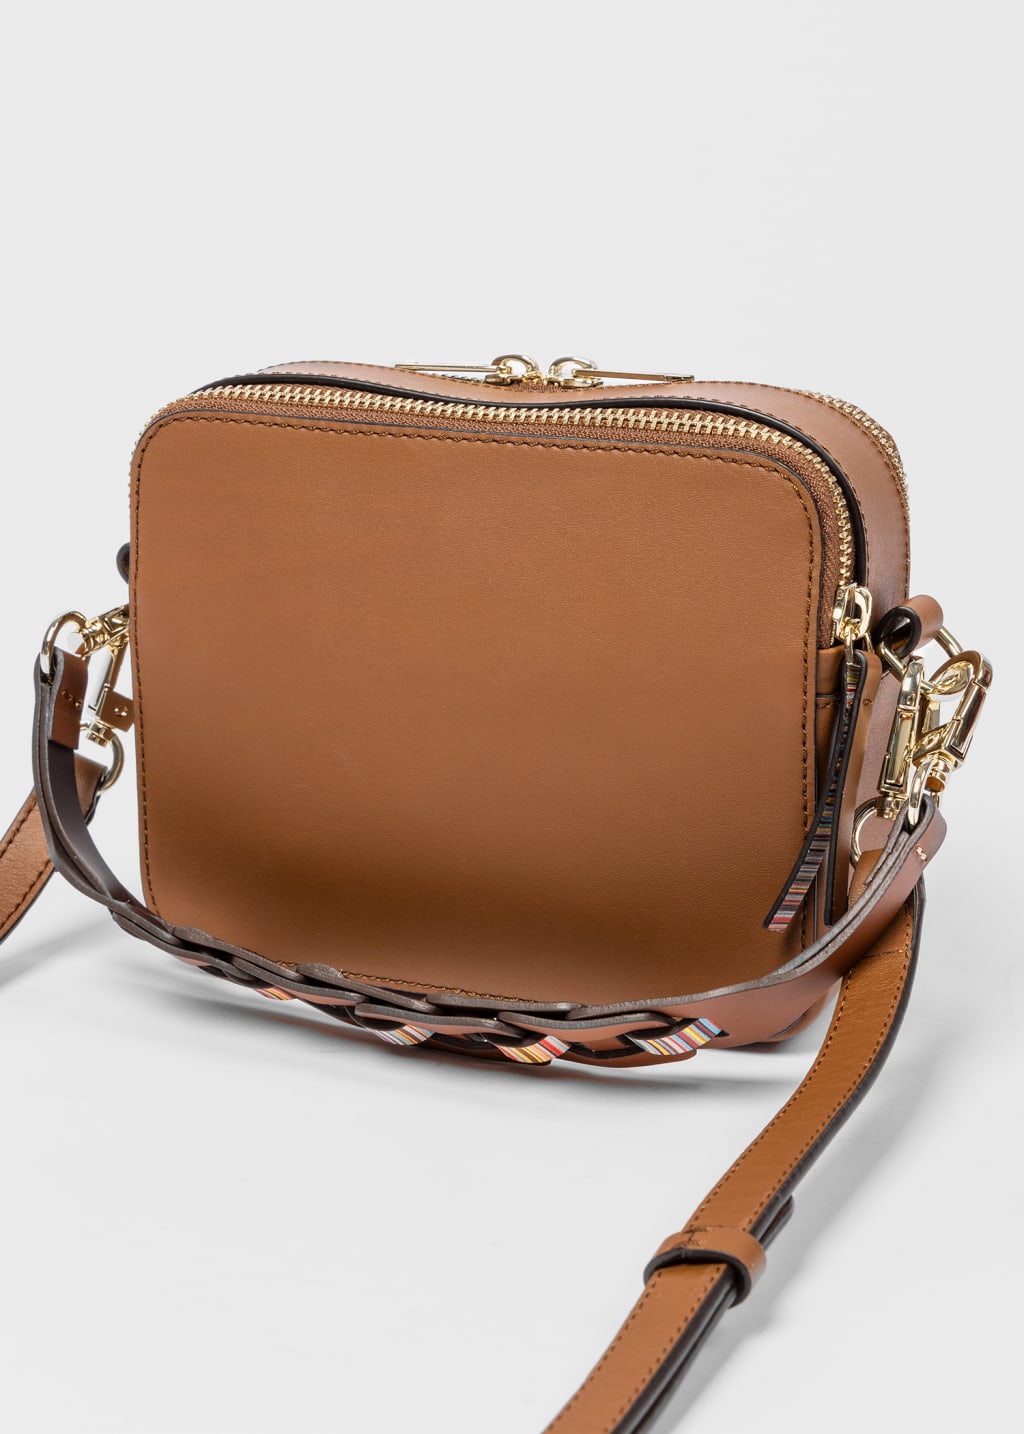 Model view - Women's Tan Leather 'Signature Stripe' Camera Bag